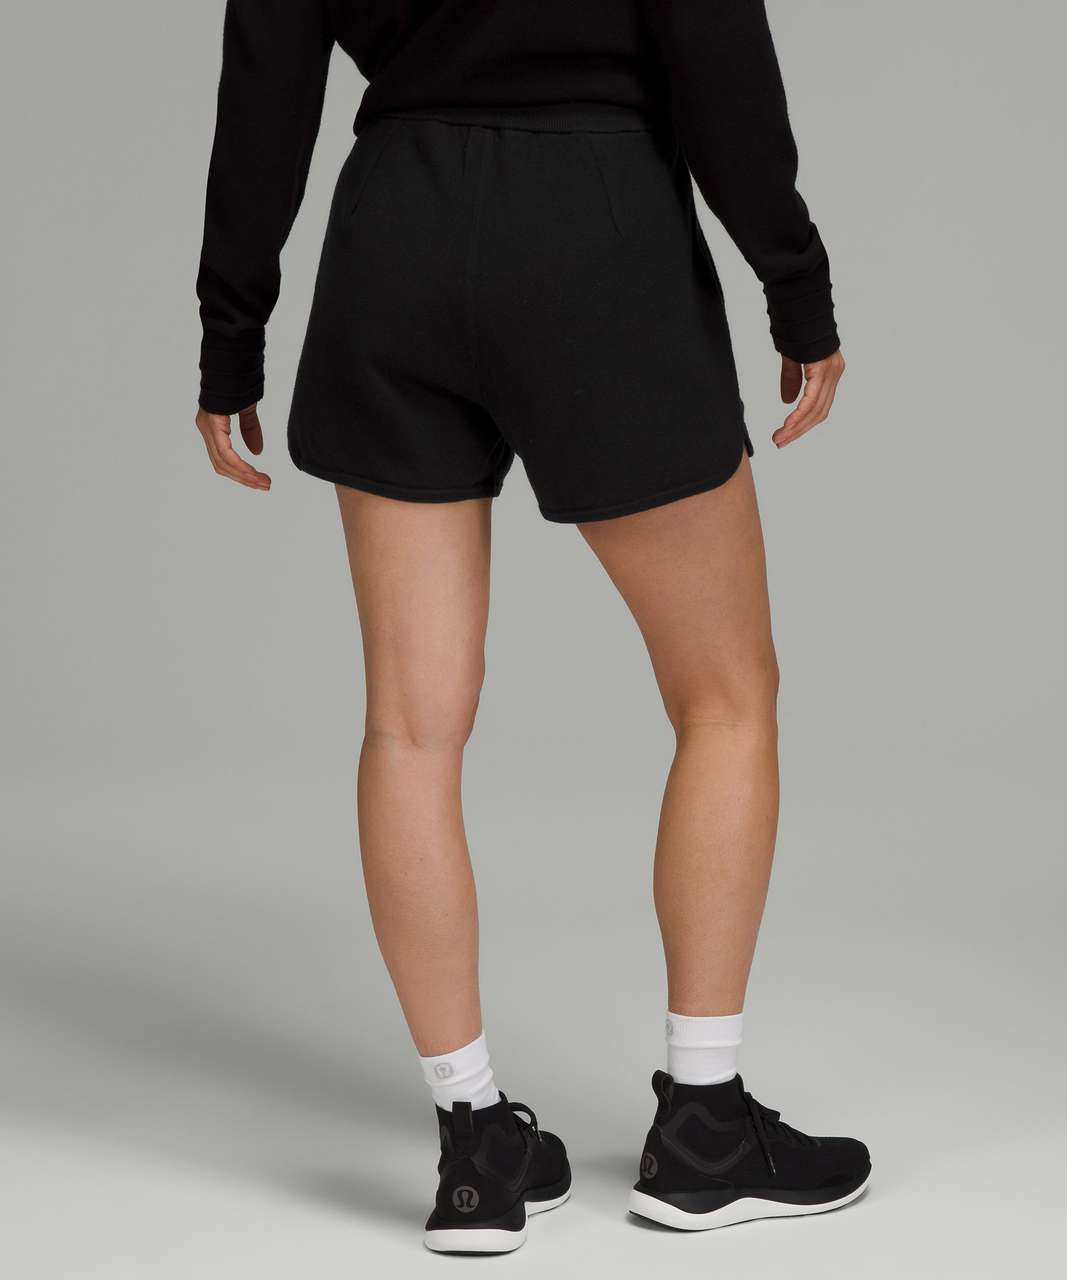 Lululemon Athletica Rare speed black leopard print shorts women's size 4